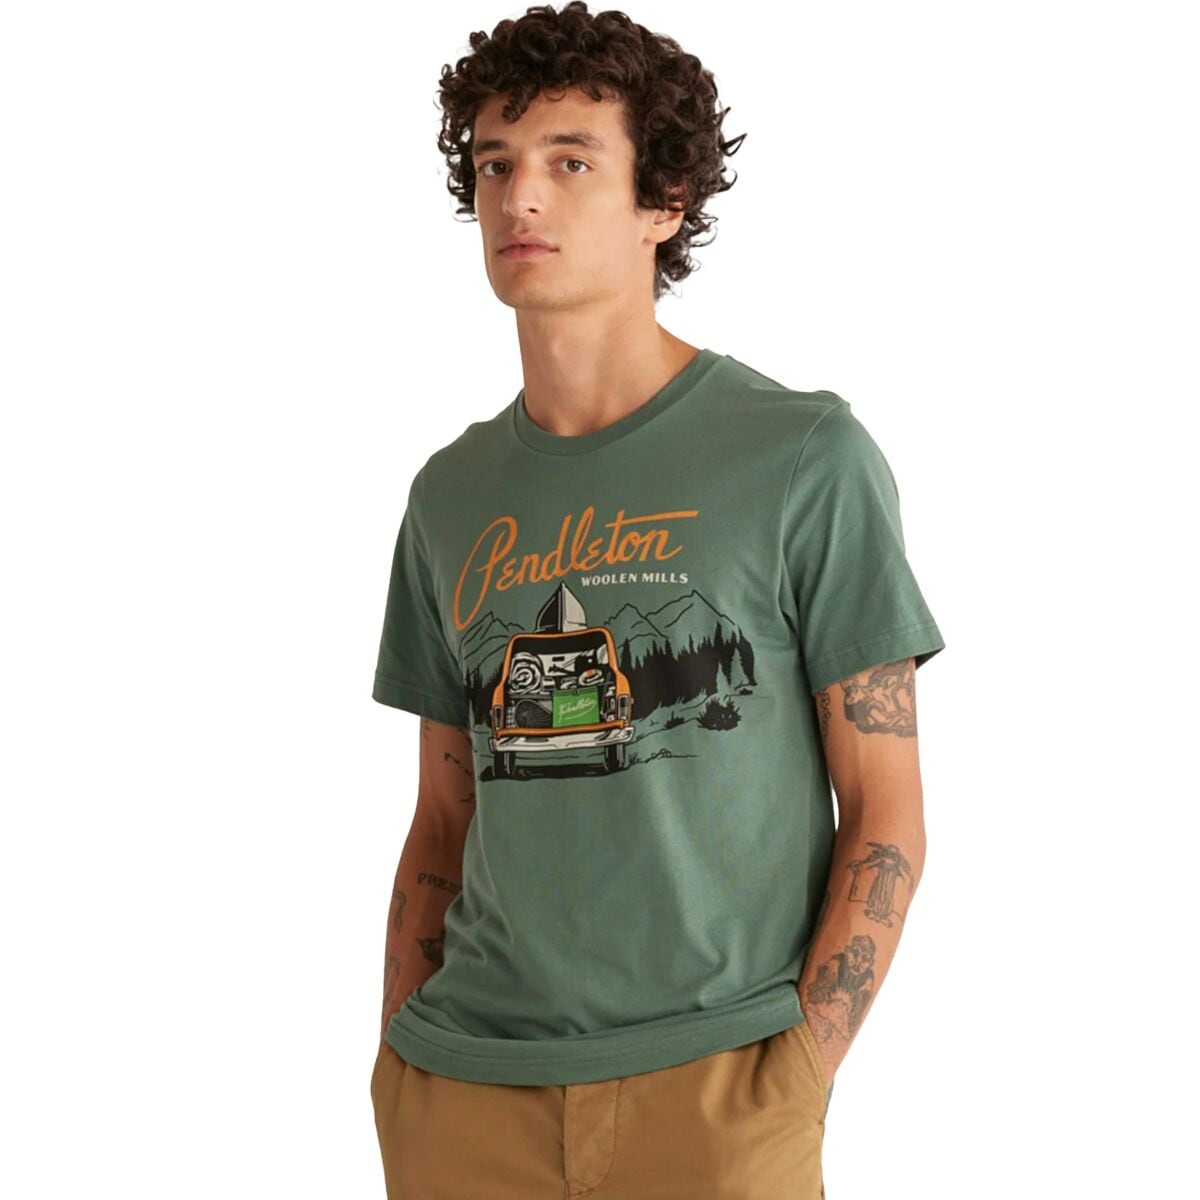 Camper Graphic T-Shirt - Men